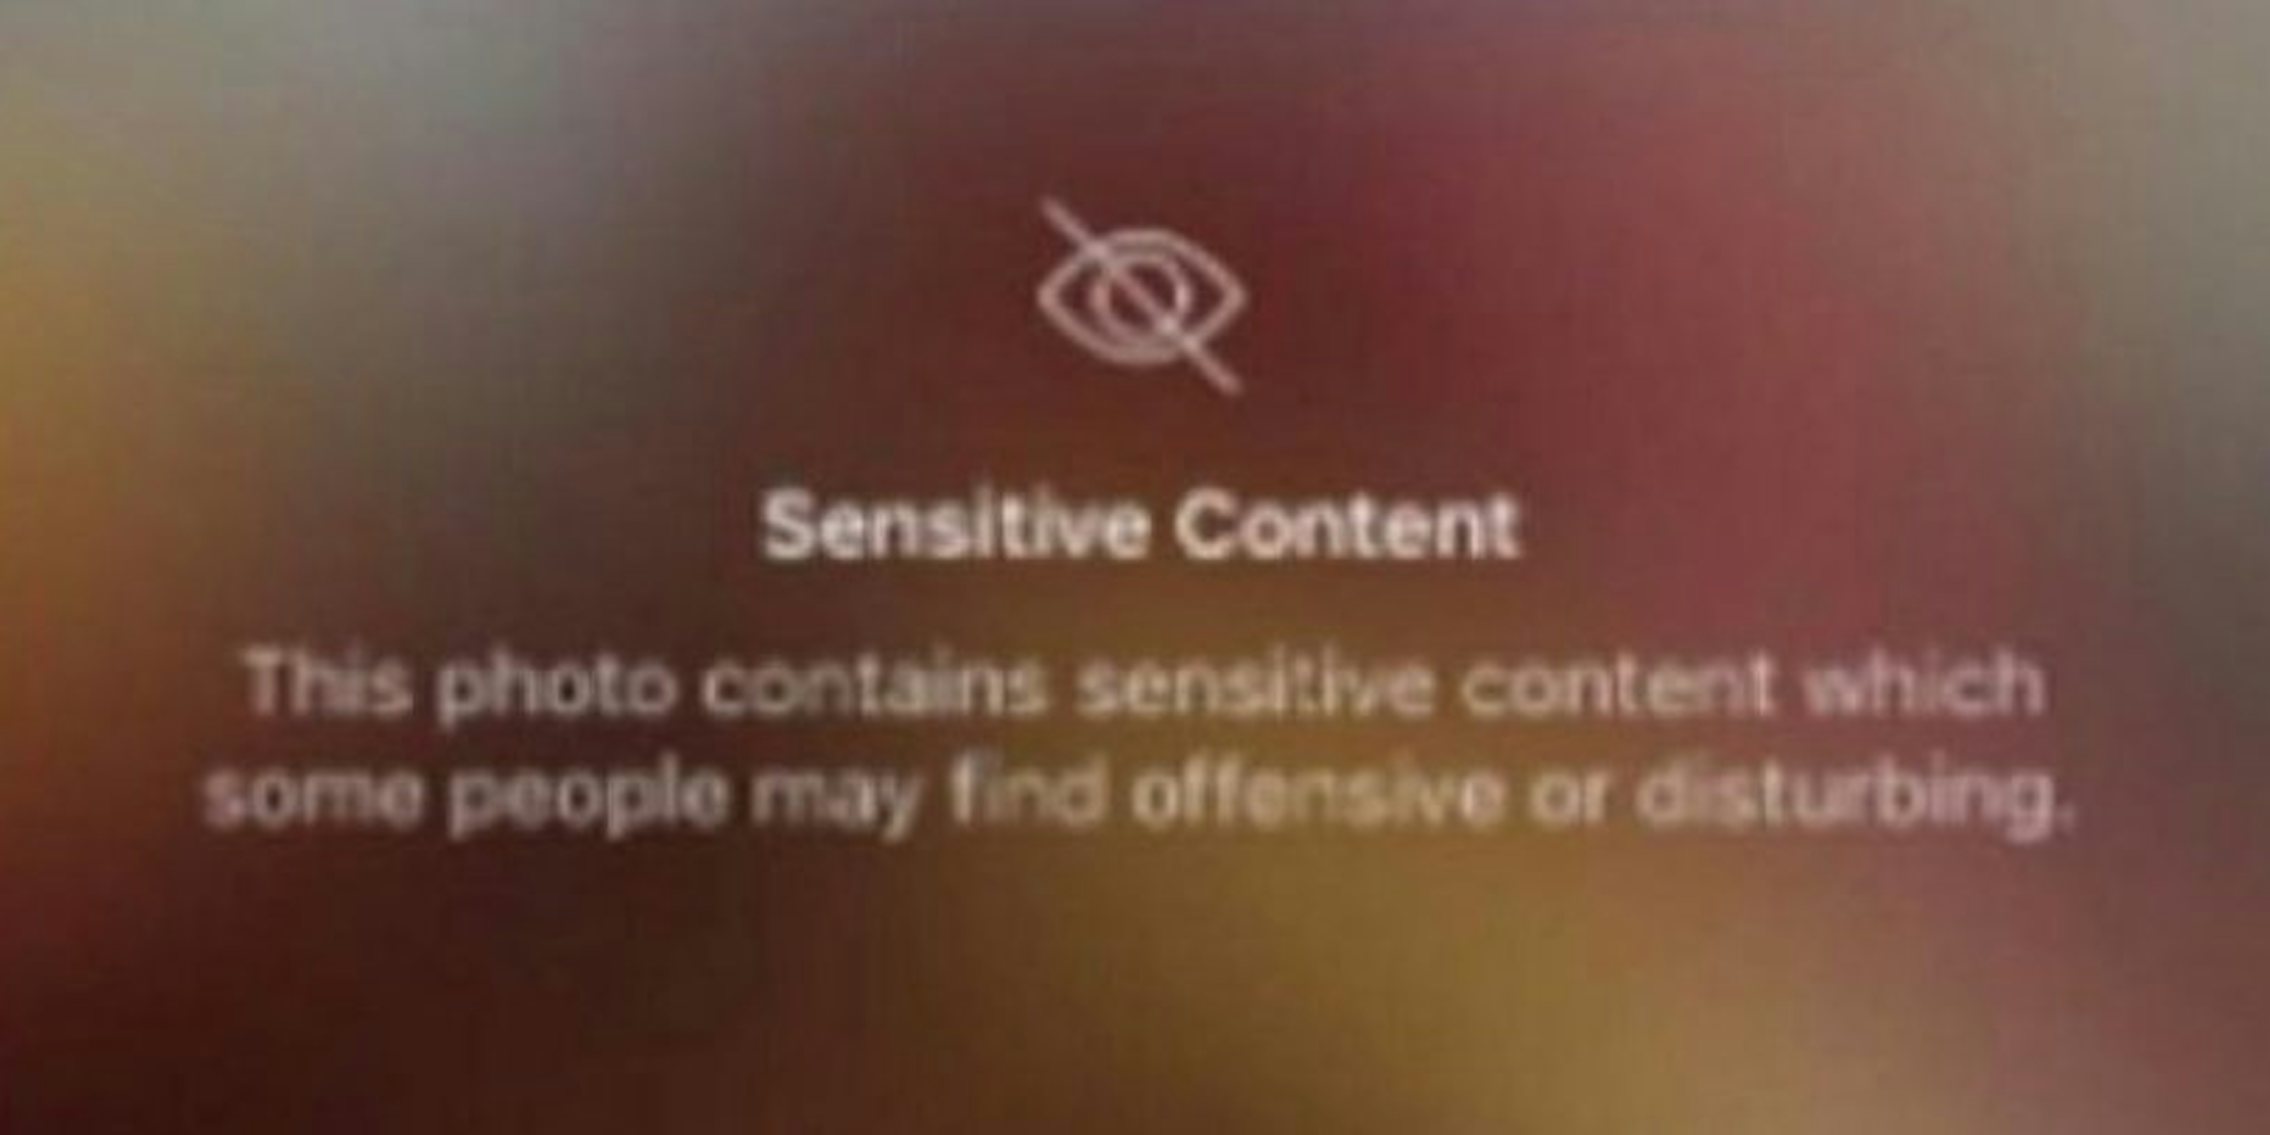 instagram blur sensitive content